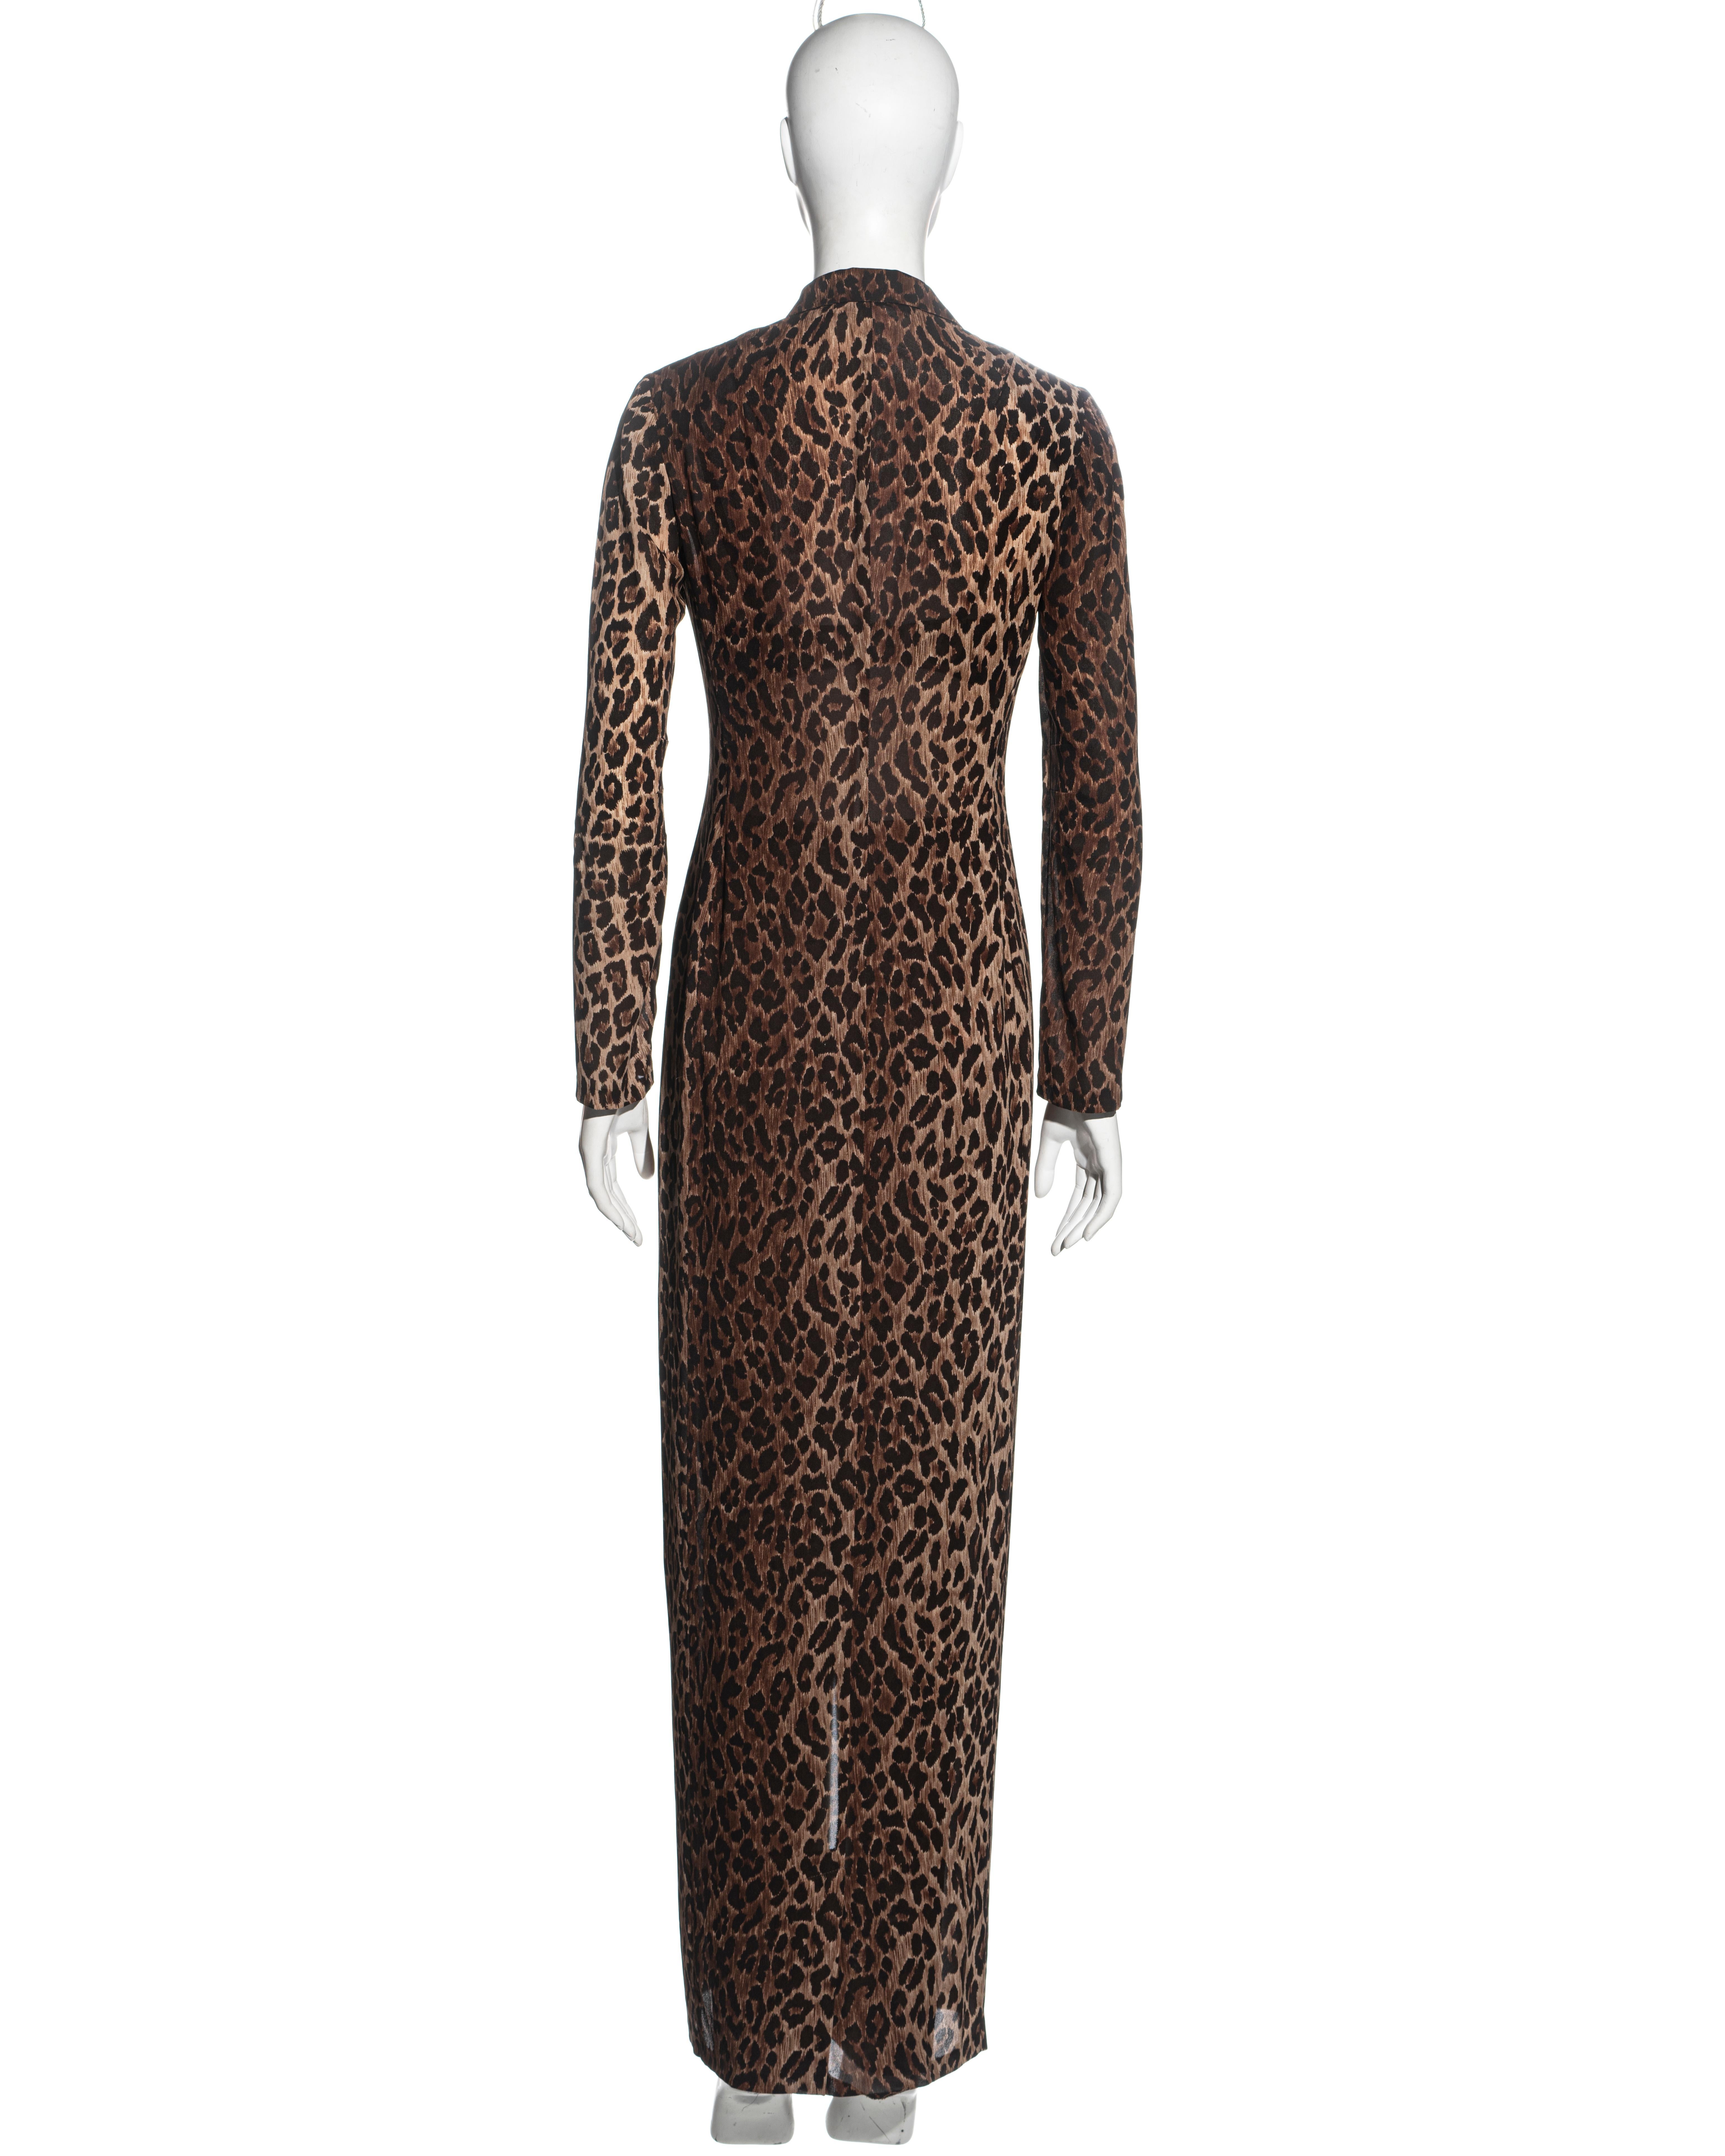 Dolce & Gabbana leopard print silk coat, pants and bra ensemble, ss 1997 For Sale 5